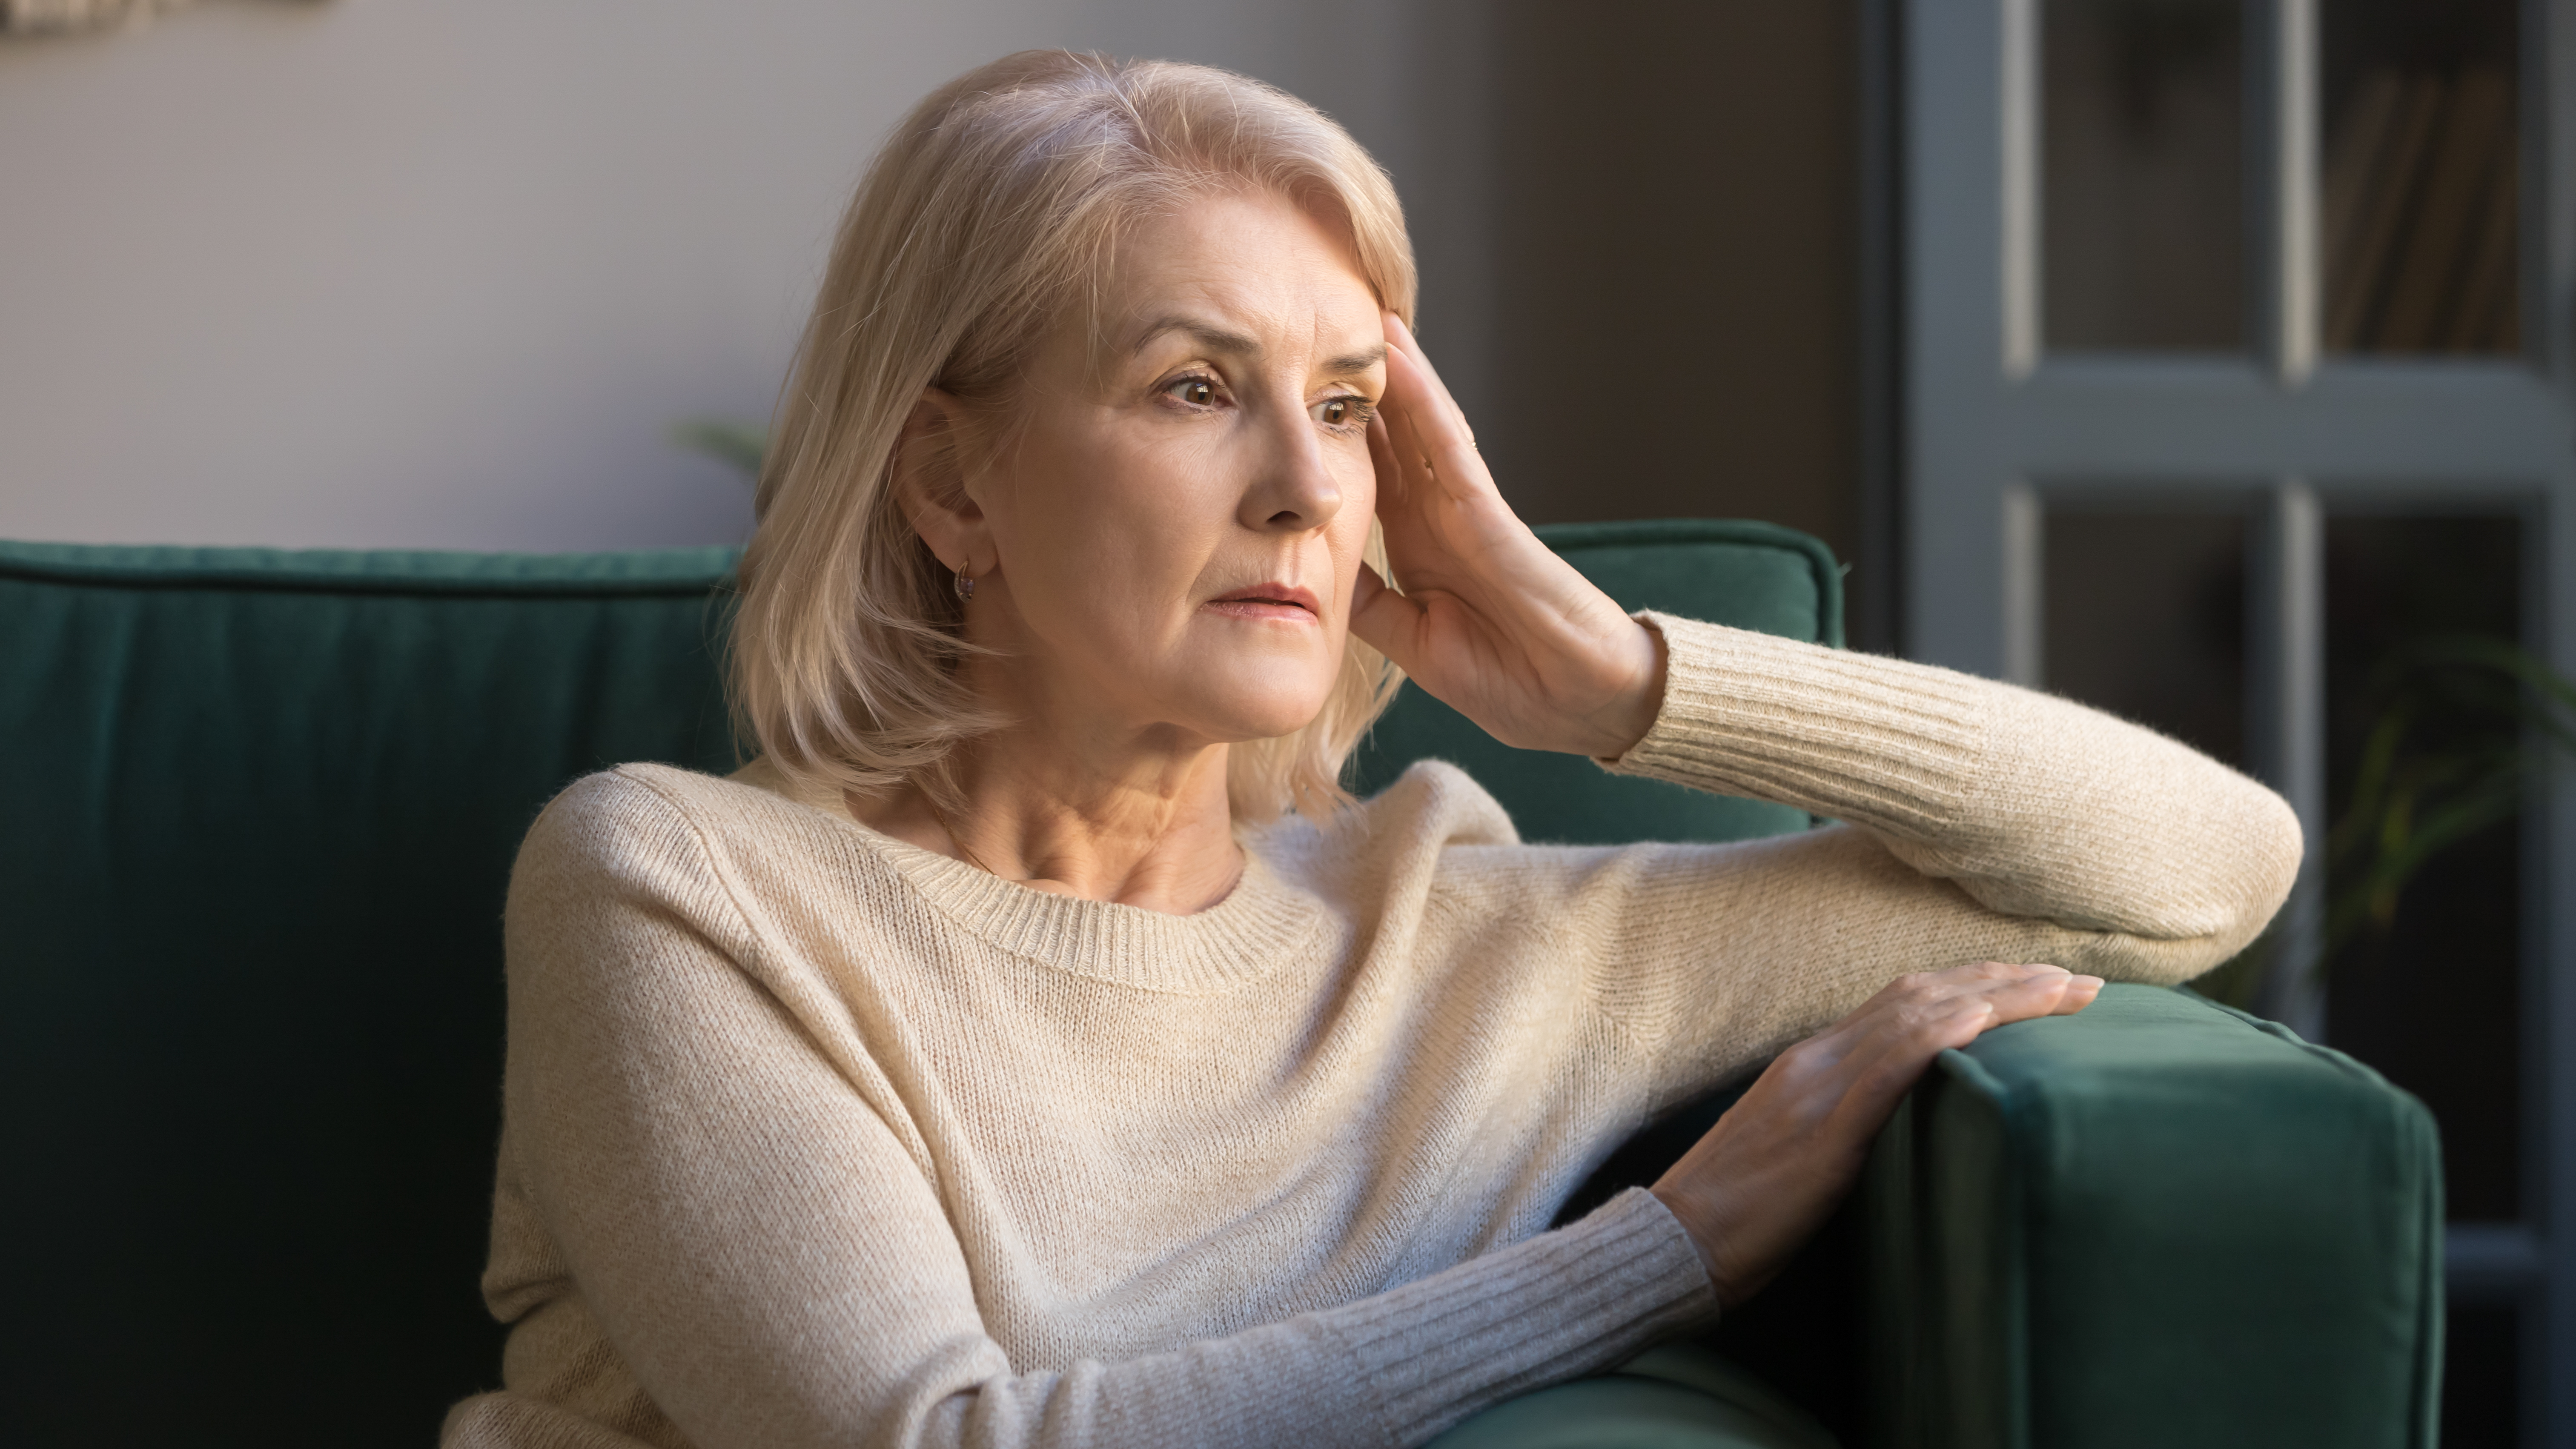 An upset elderly woman sitting on a sofa | Source: Shutterstock